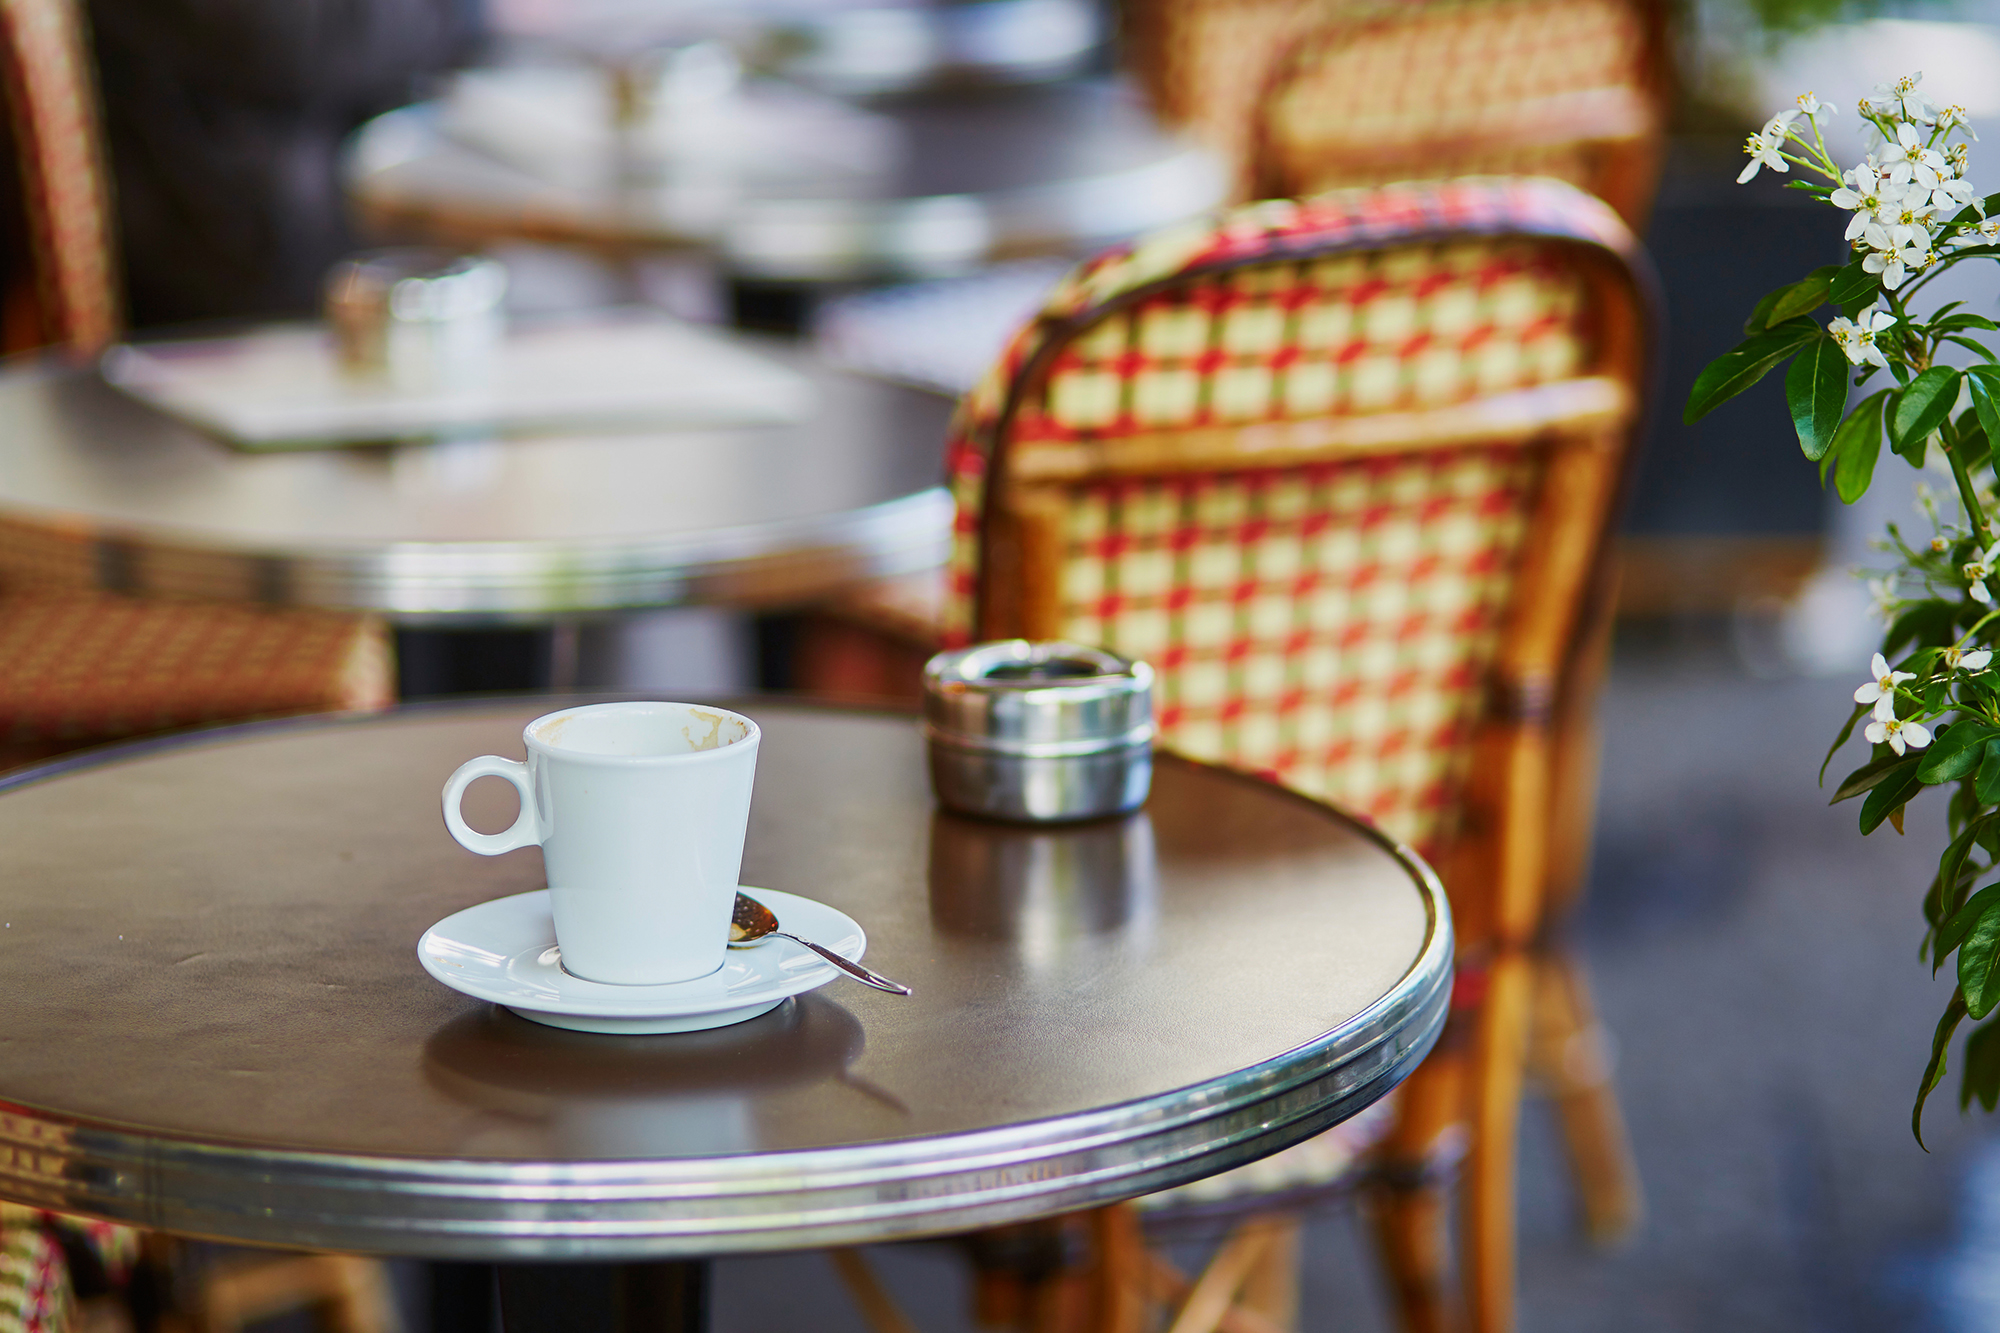 Coffee at Parisian cafe